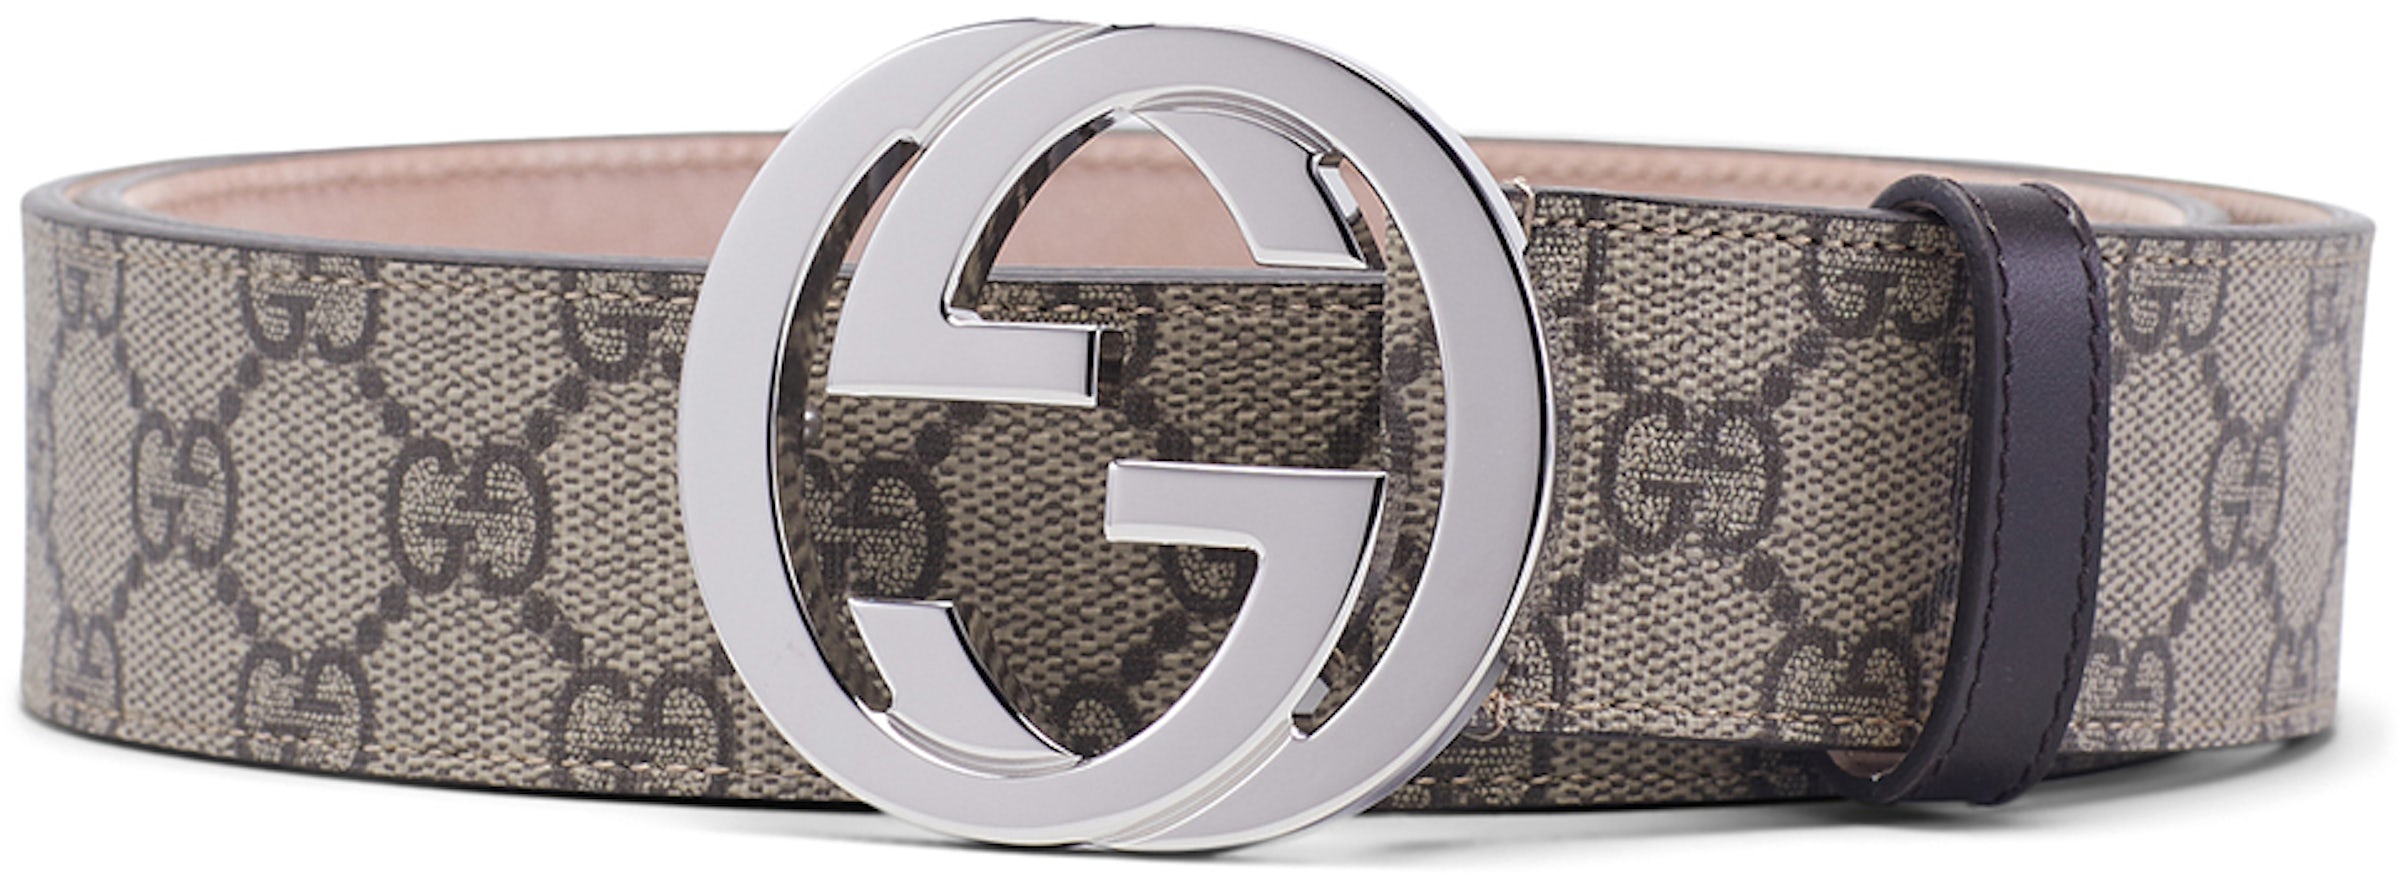 Face Masks Gucci Louis Vuitton Chanel Fendi Supreme GG LV